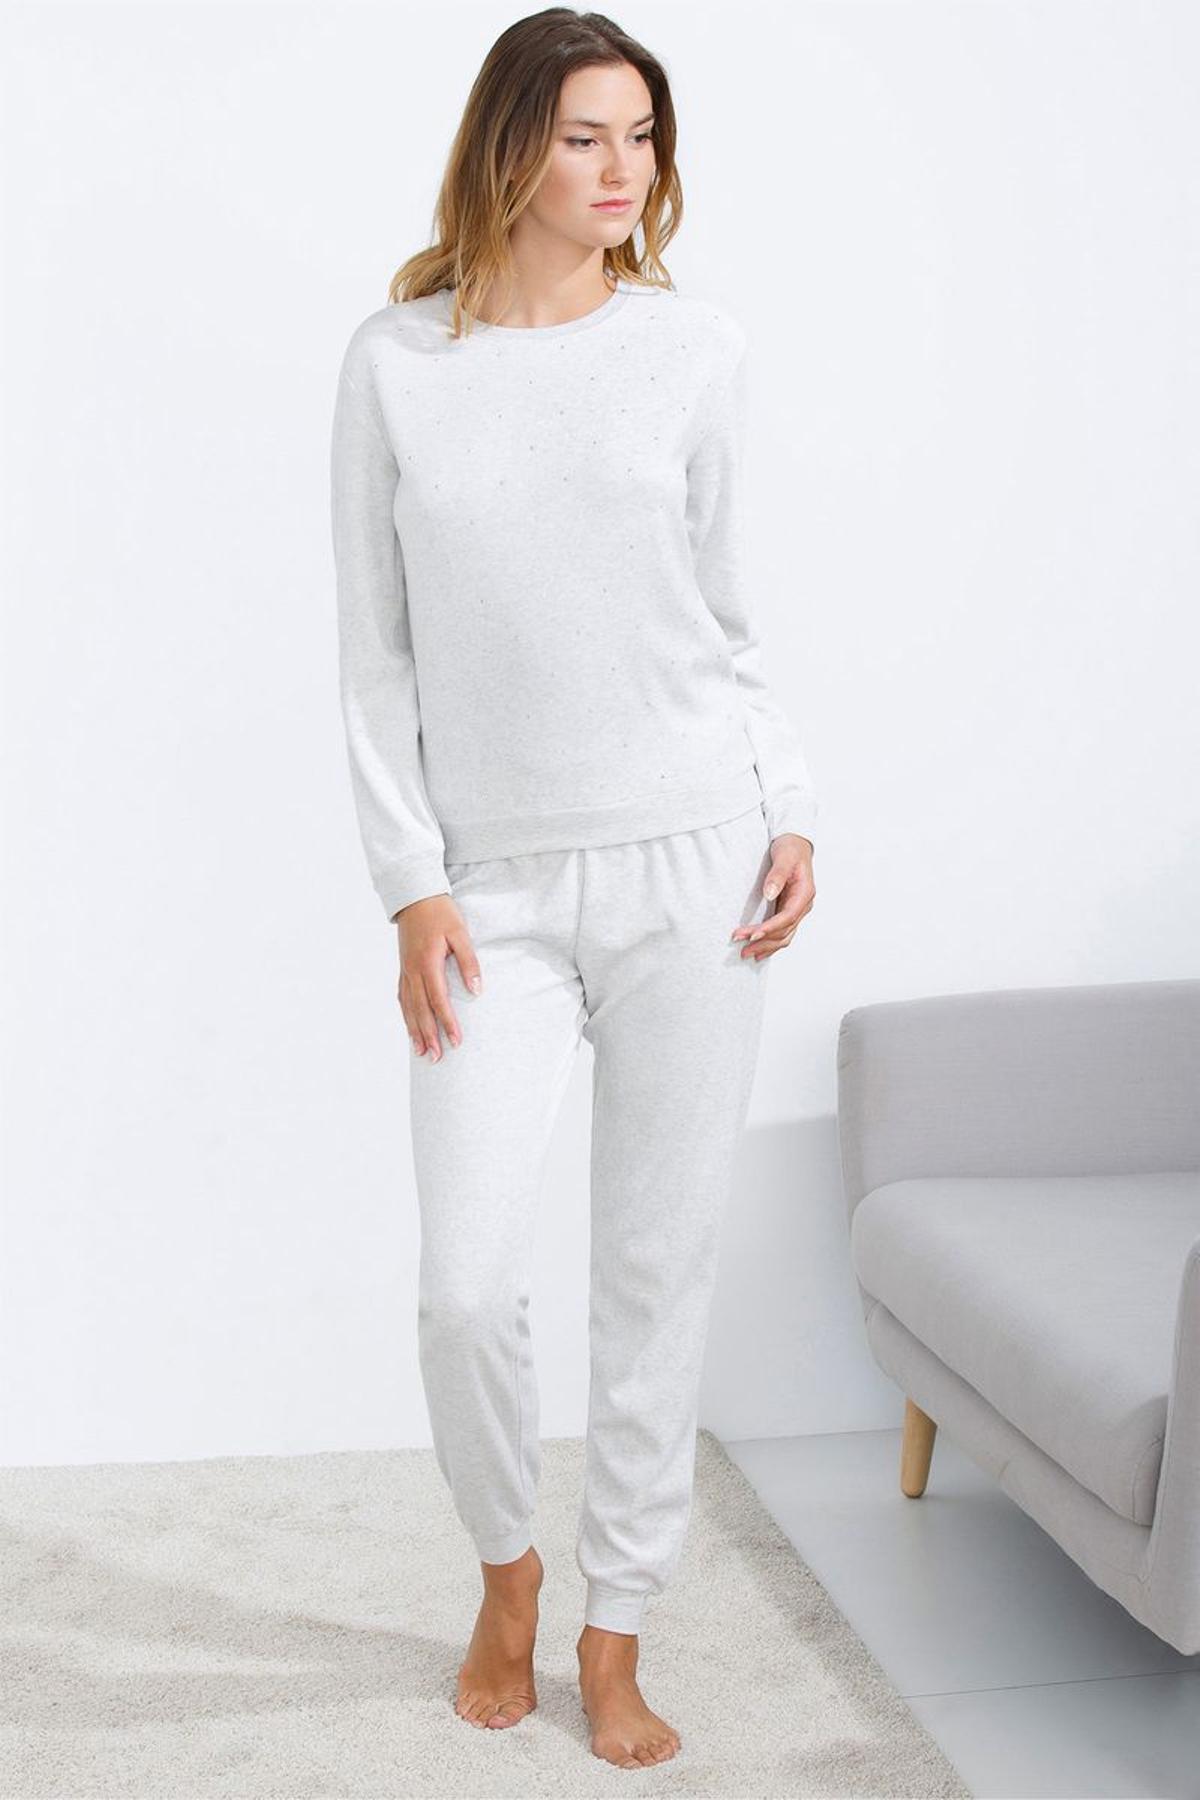 Rebajas Women' Secret, pijama blanco (15,99€)